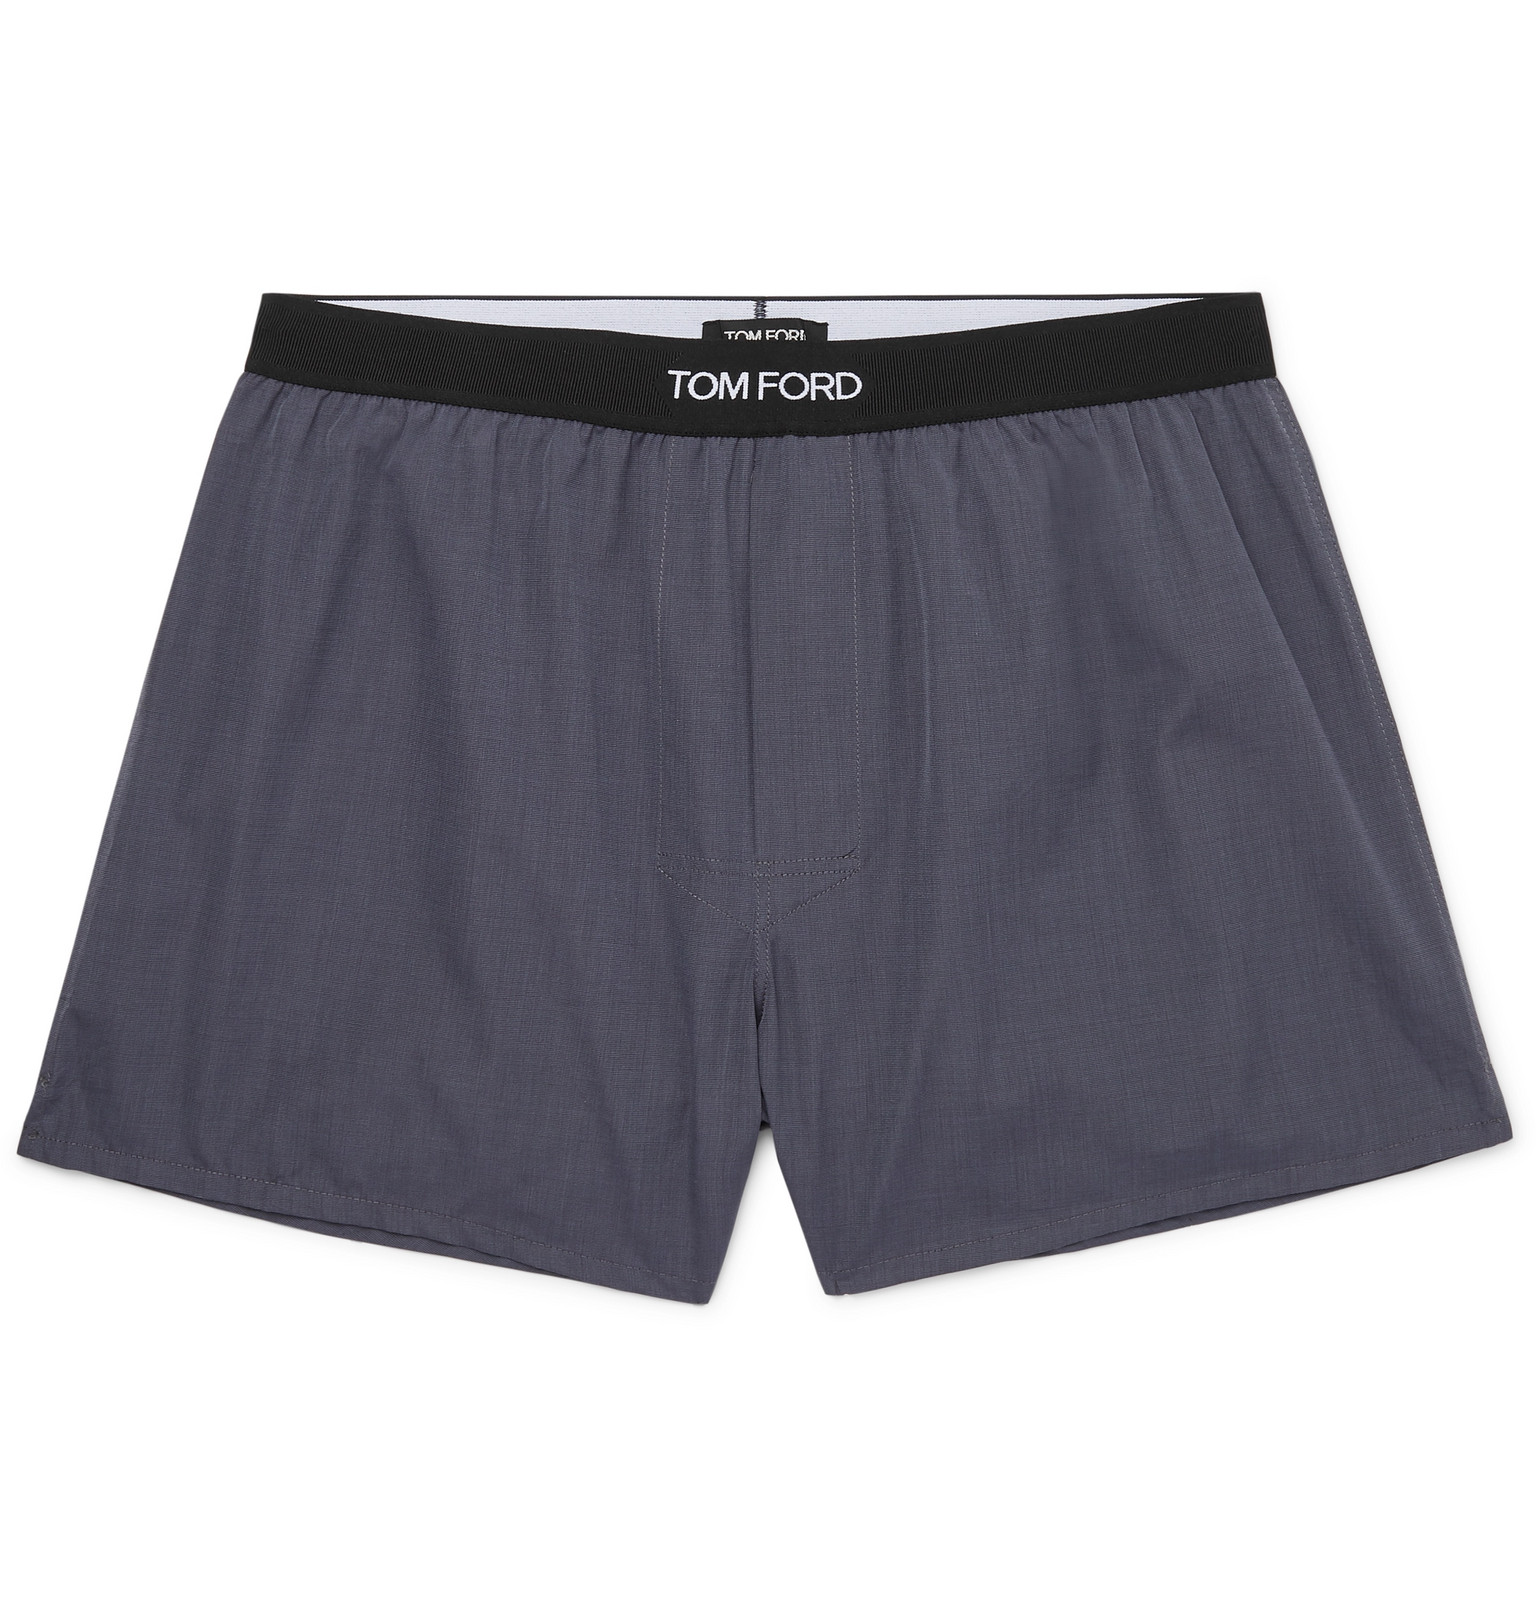 TOM FORD - Grosgrain-Trimmed Cotton Boxer Shorts - Men - Gray | The ...